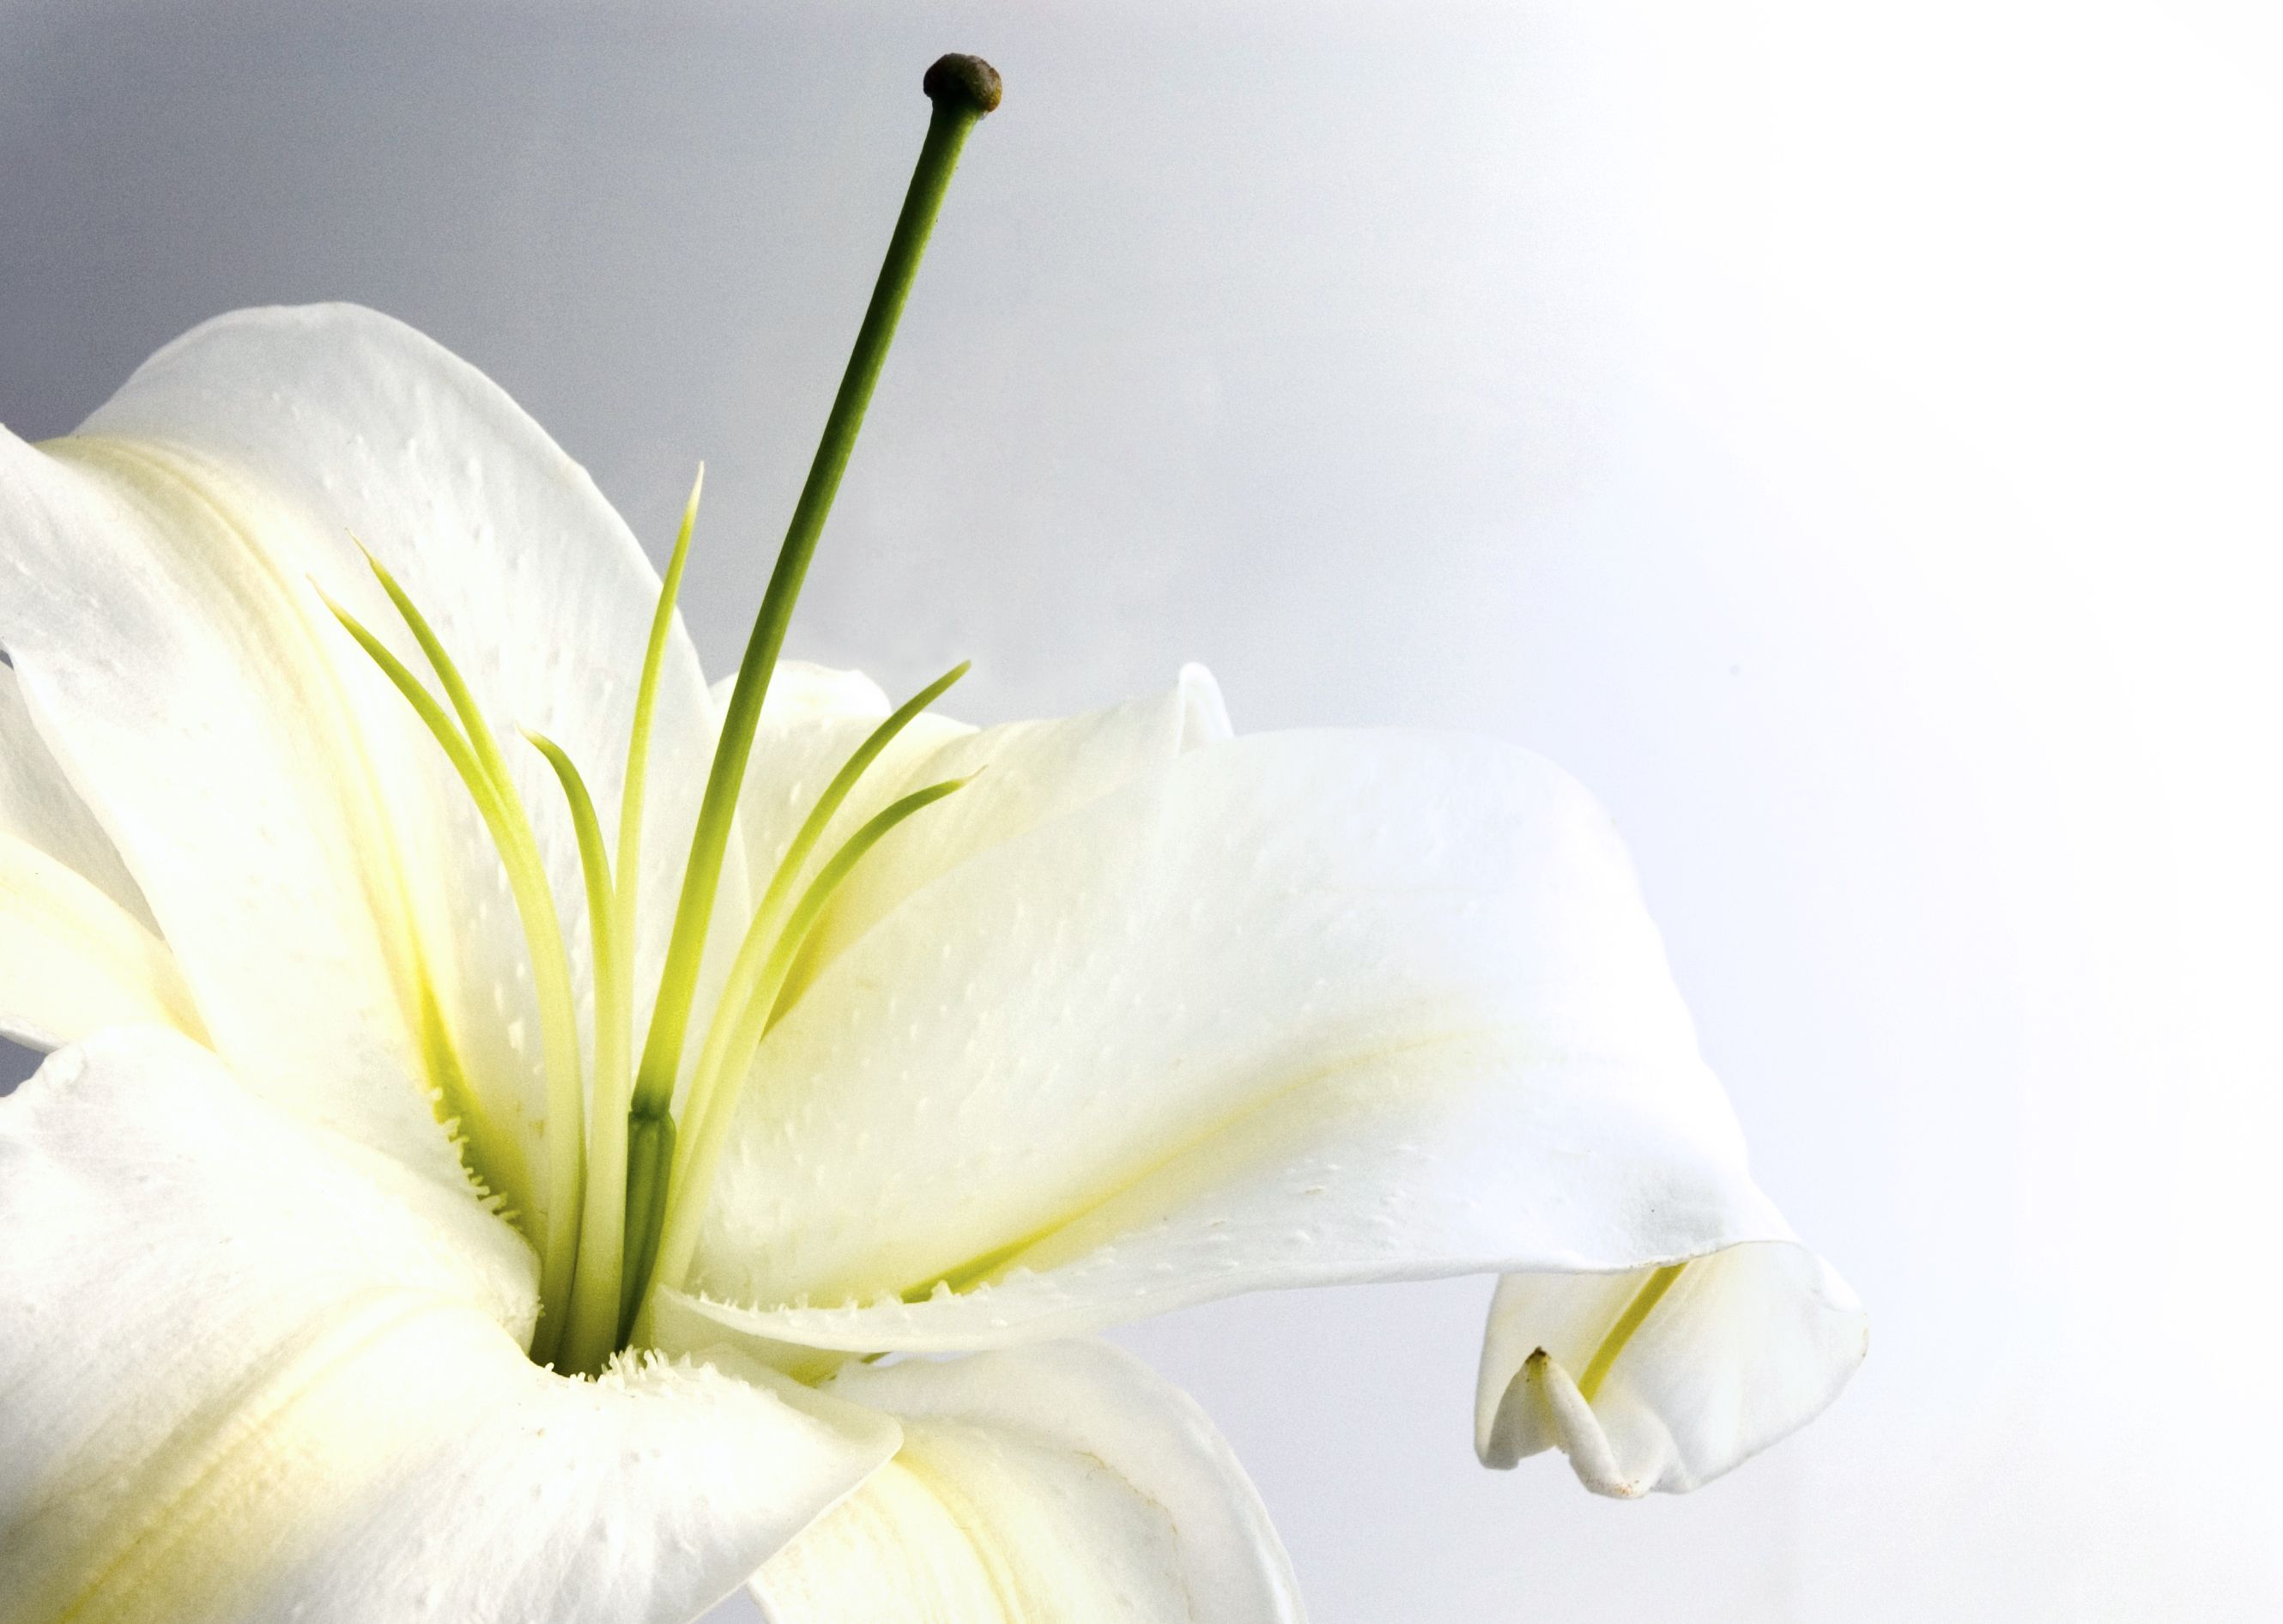 Pure White Lilies | Graphic design & logos | Pinterest | White ...